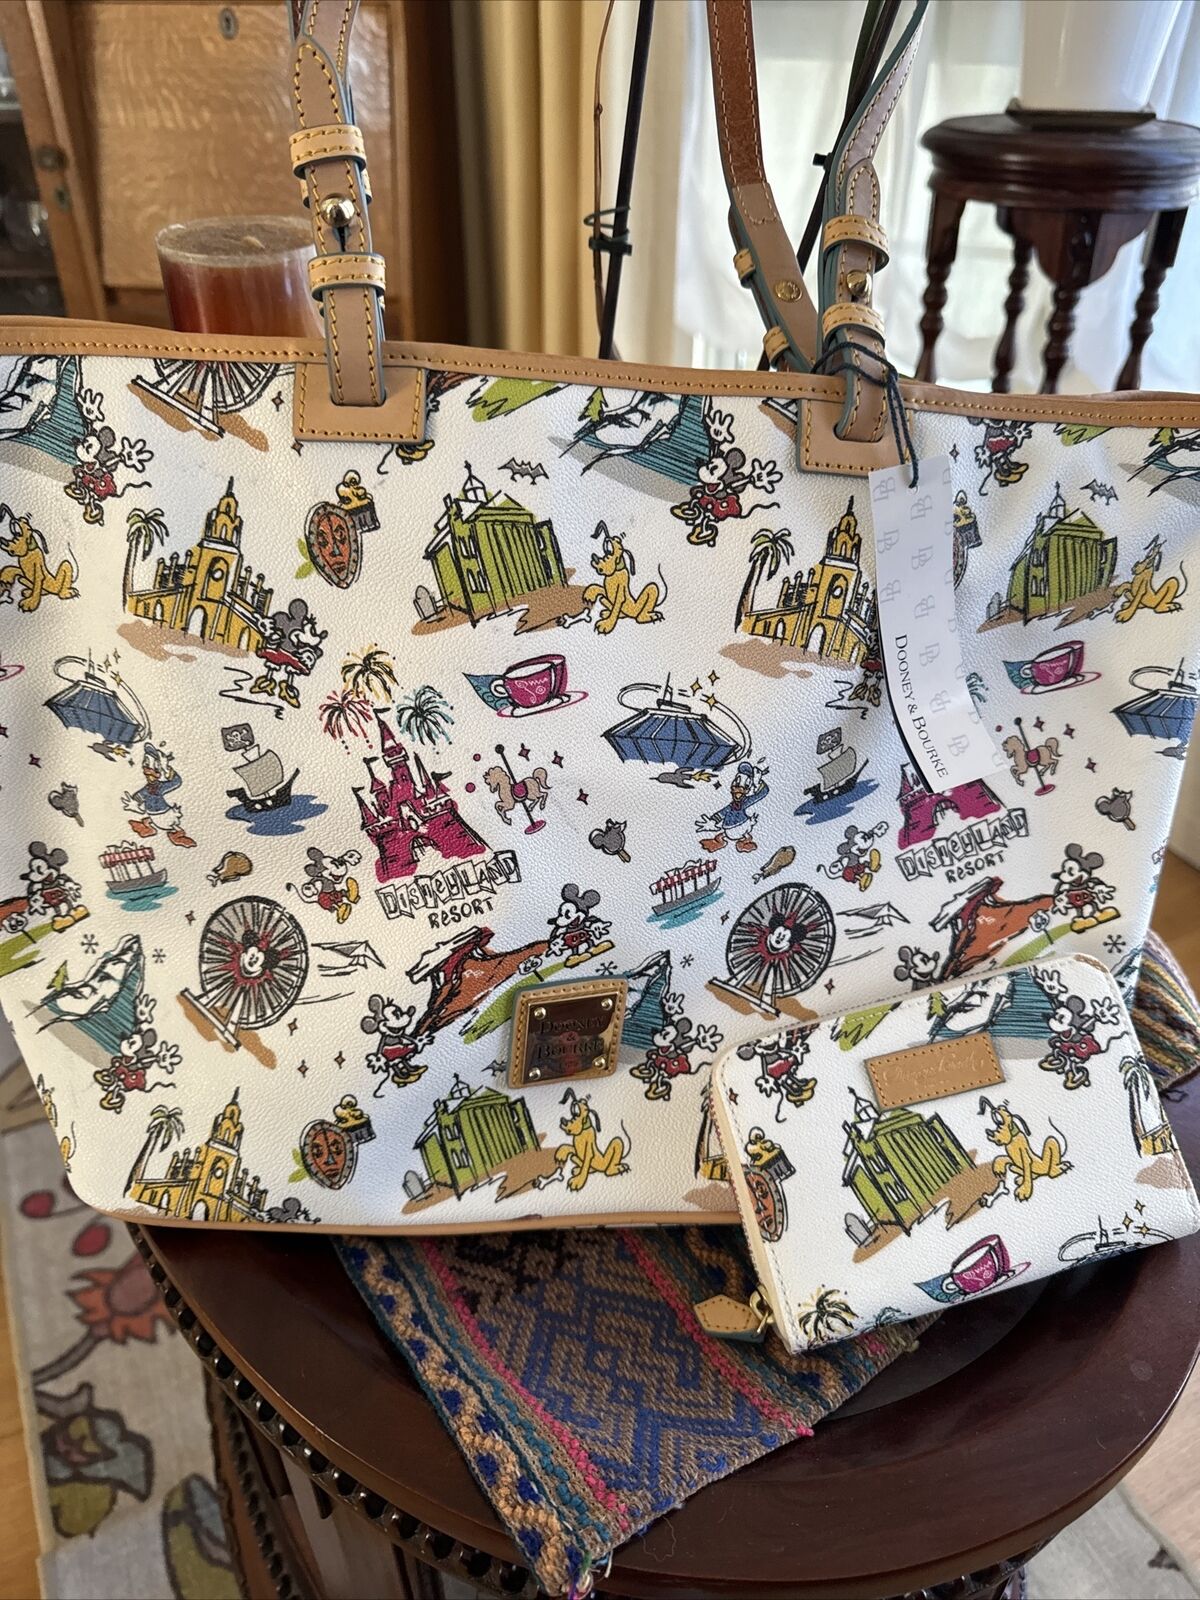 Disneyland Disneyanna Shopper Dooney & Bourke Bag W/ Matching Wallet NWOT